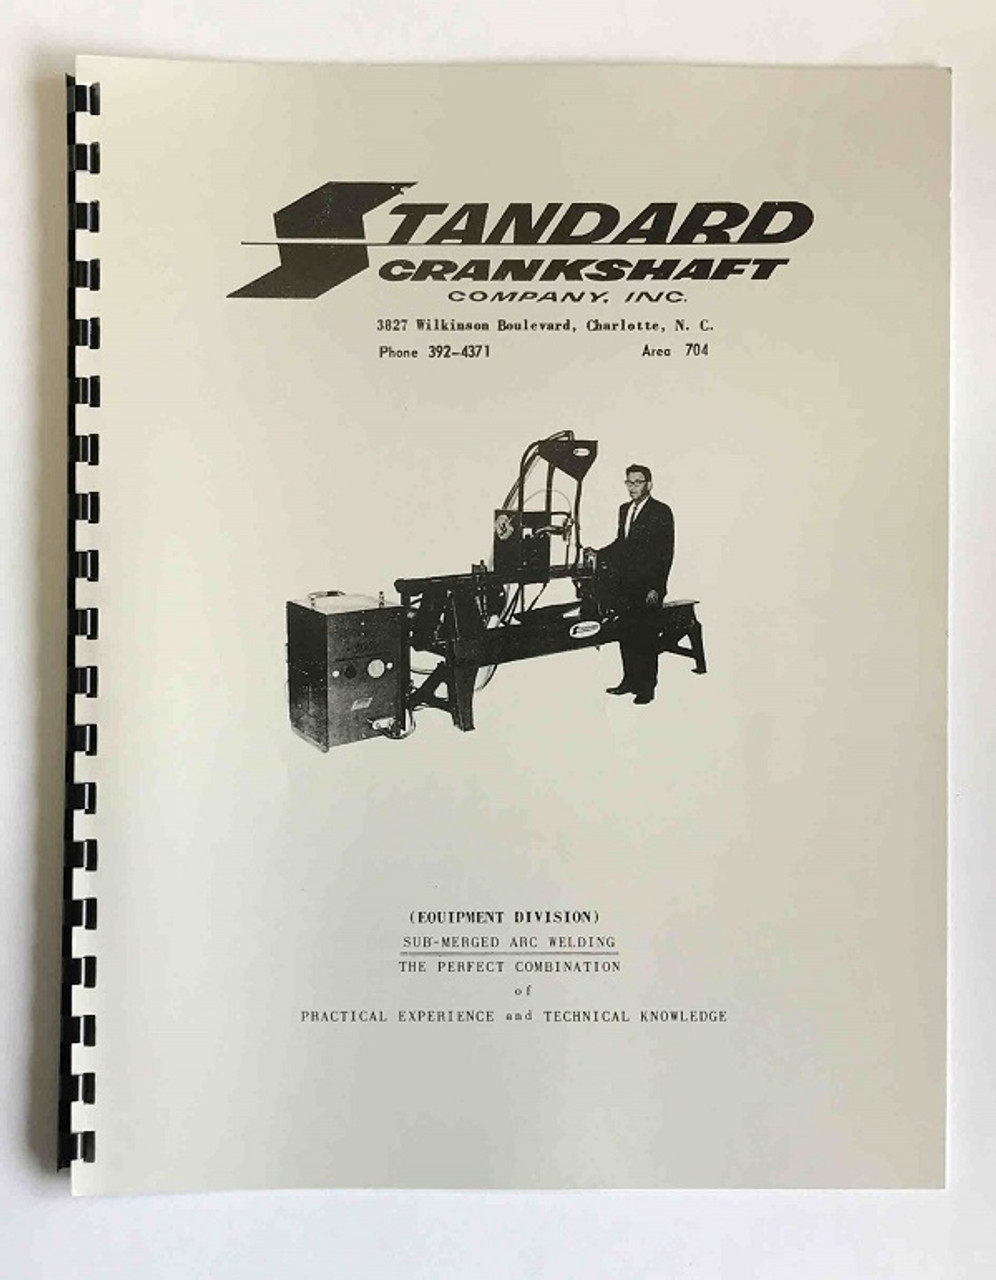 Standard Model 970 9103 & 9120HD Manual